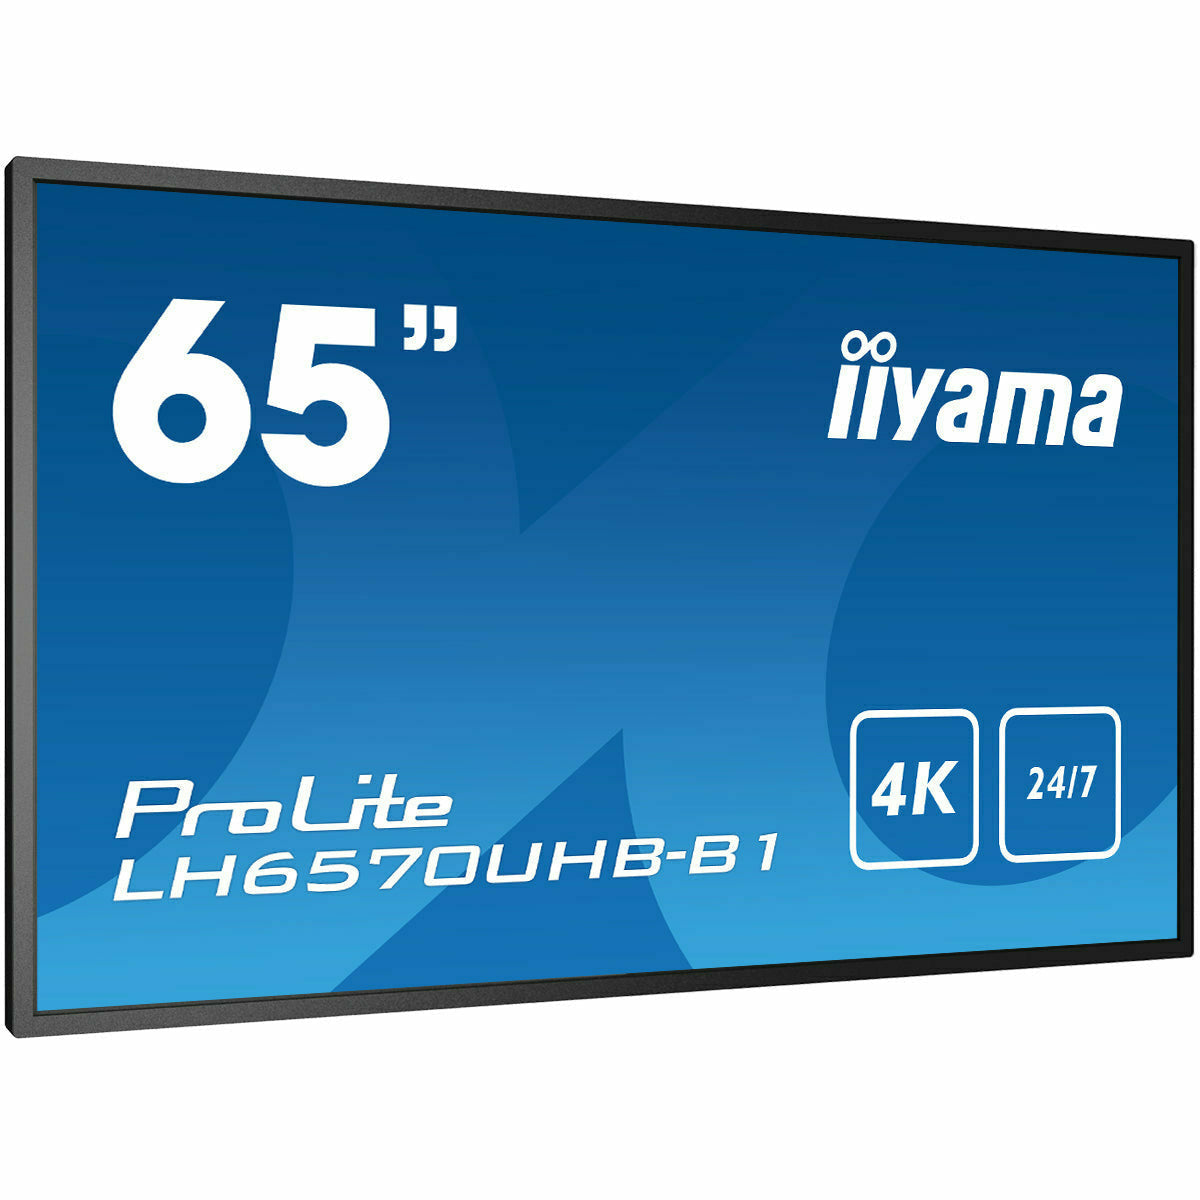 iiyama ProLite LH6570UHB-B1 65" Large Format Display with 24/7, 4K UHD, Android 9.0 and 700cd/m² High Brightness